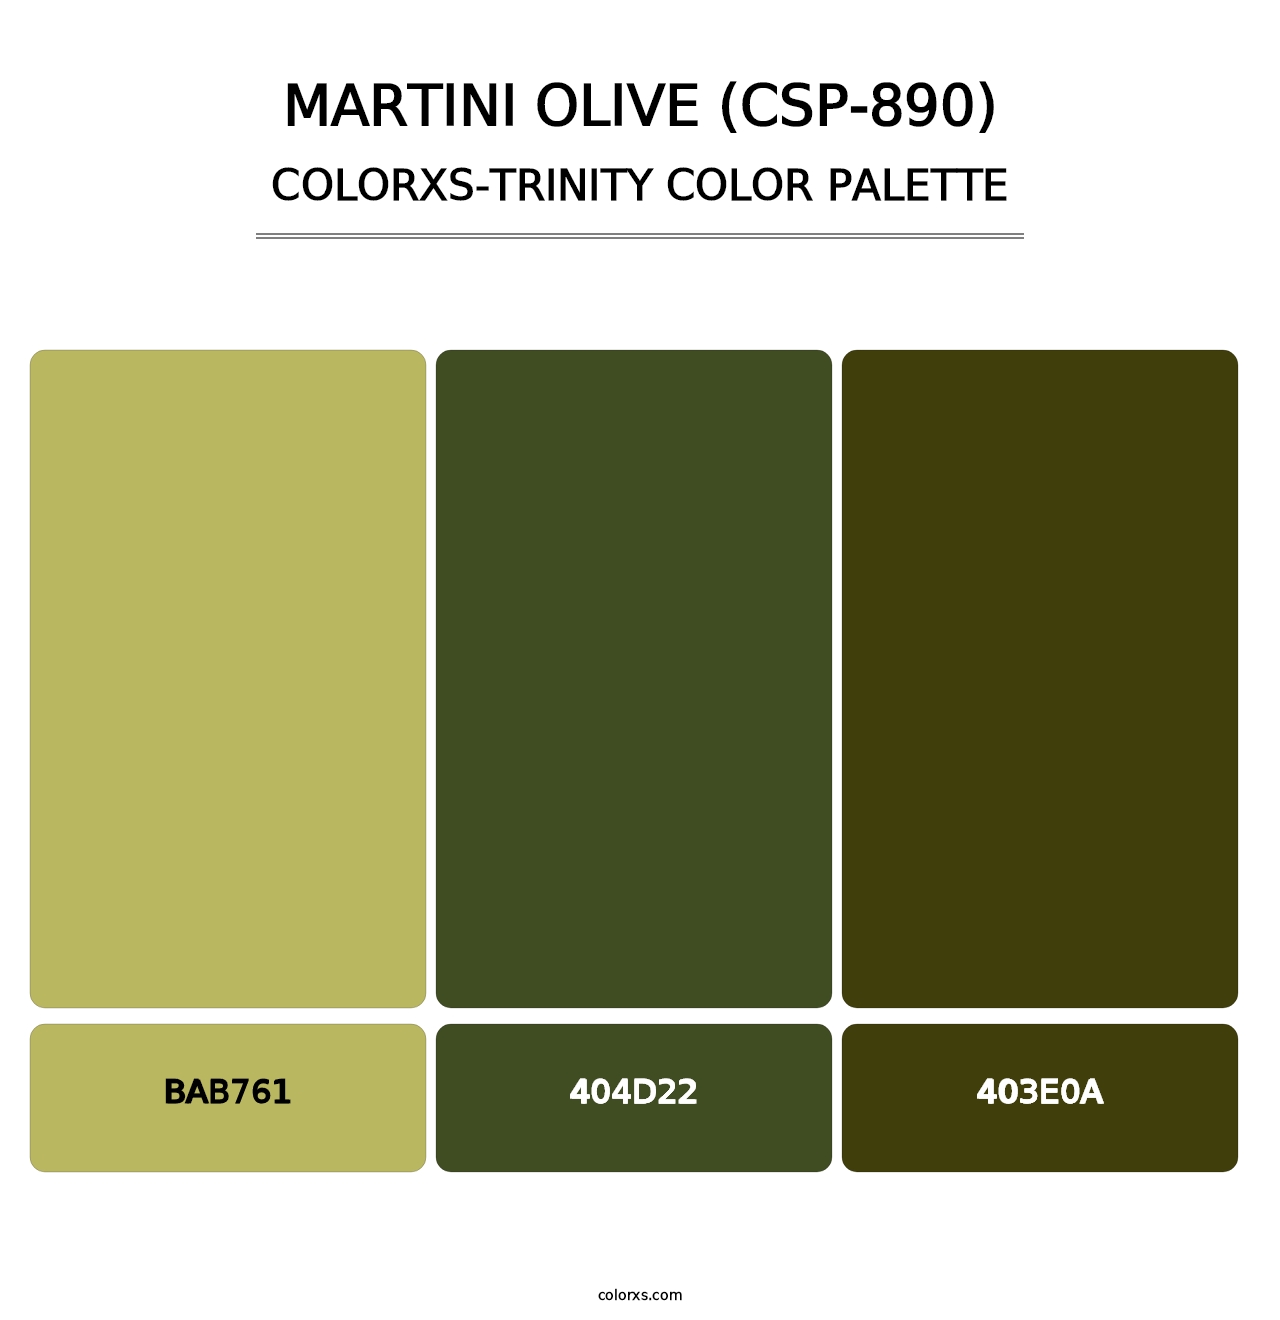 Martini Olive (CSP-890) - Colorxs Trinity Palette